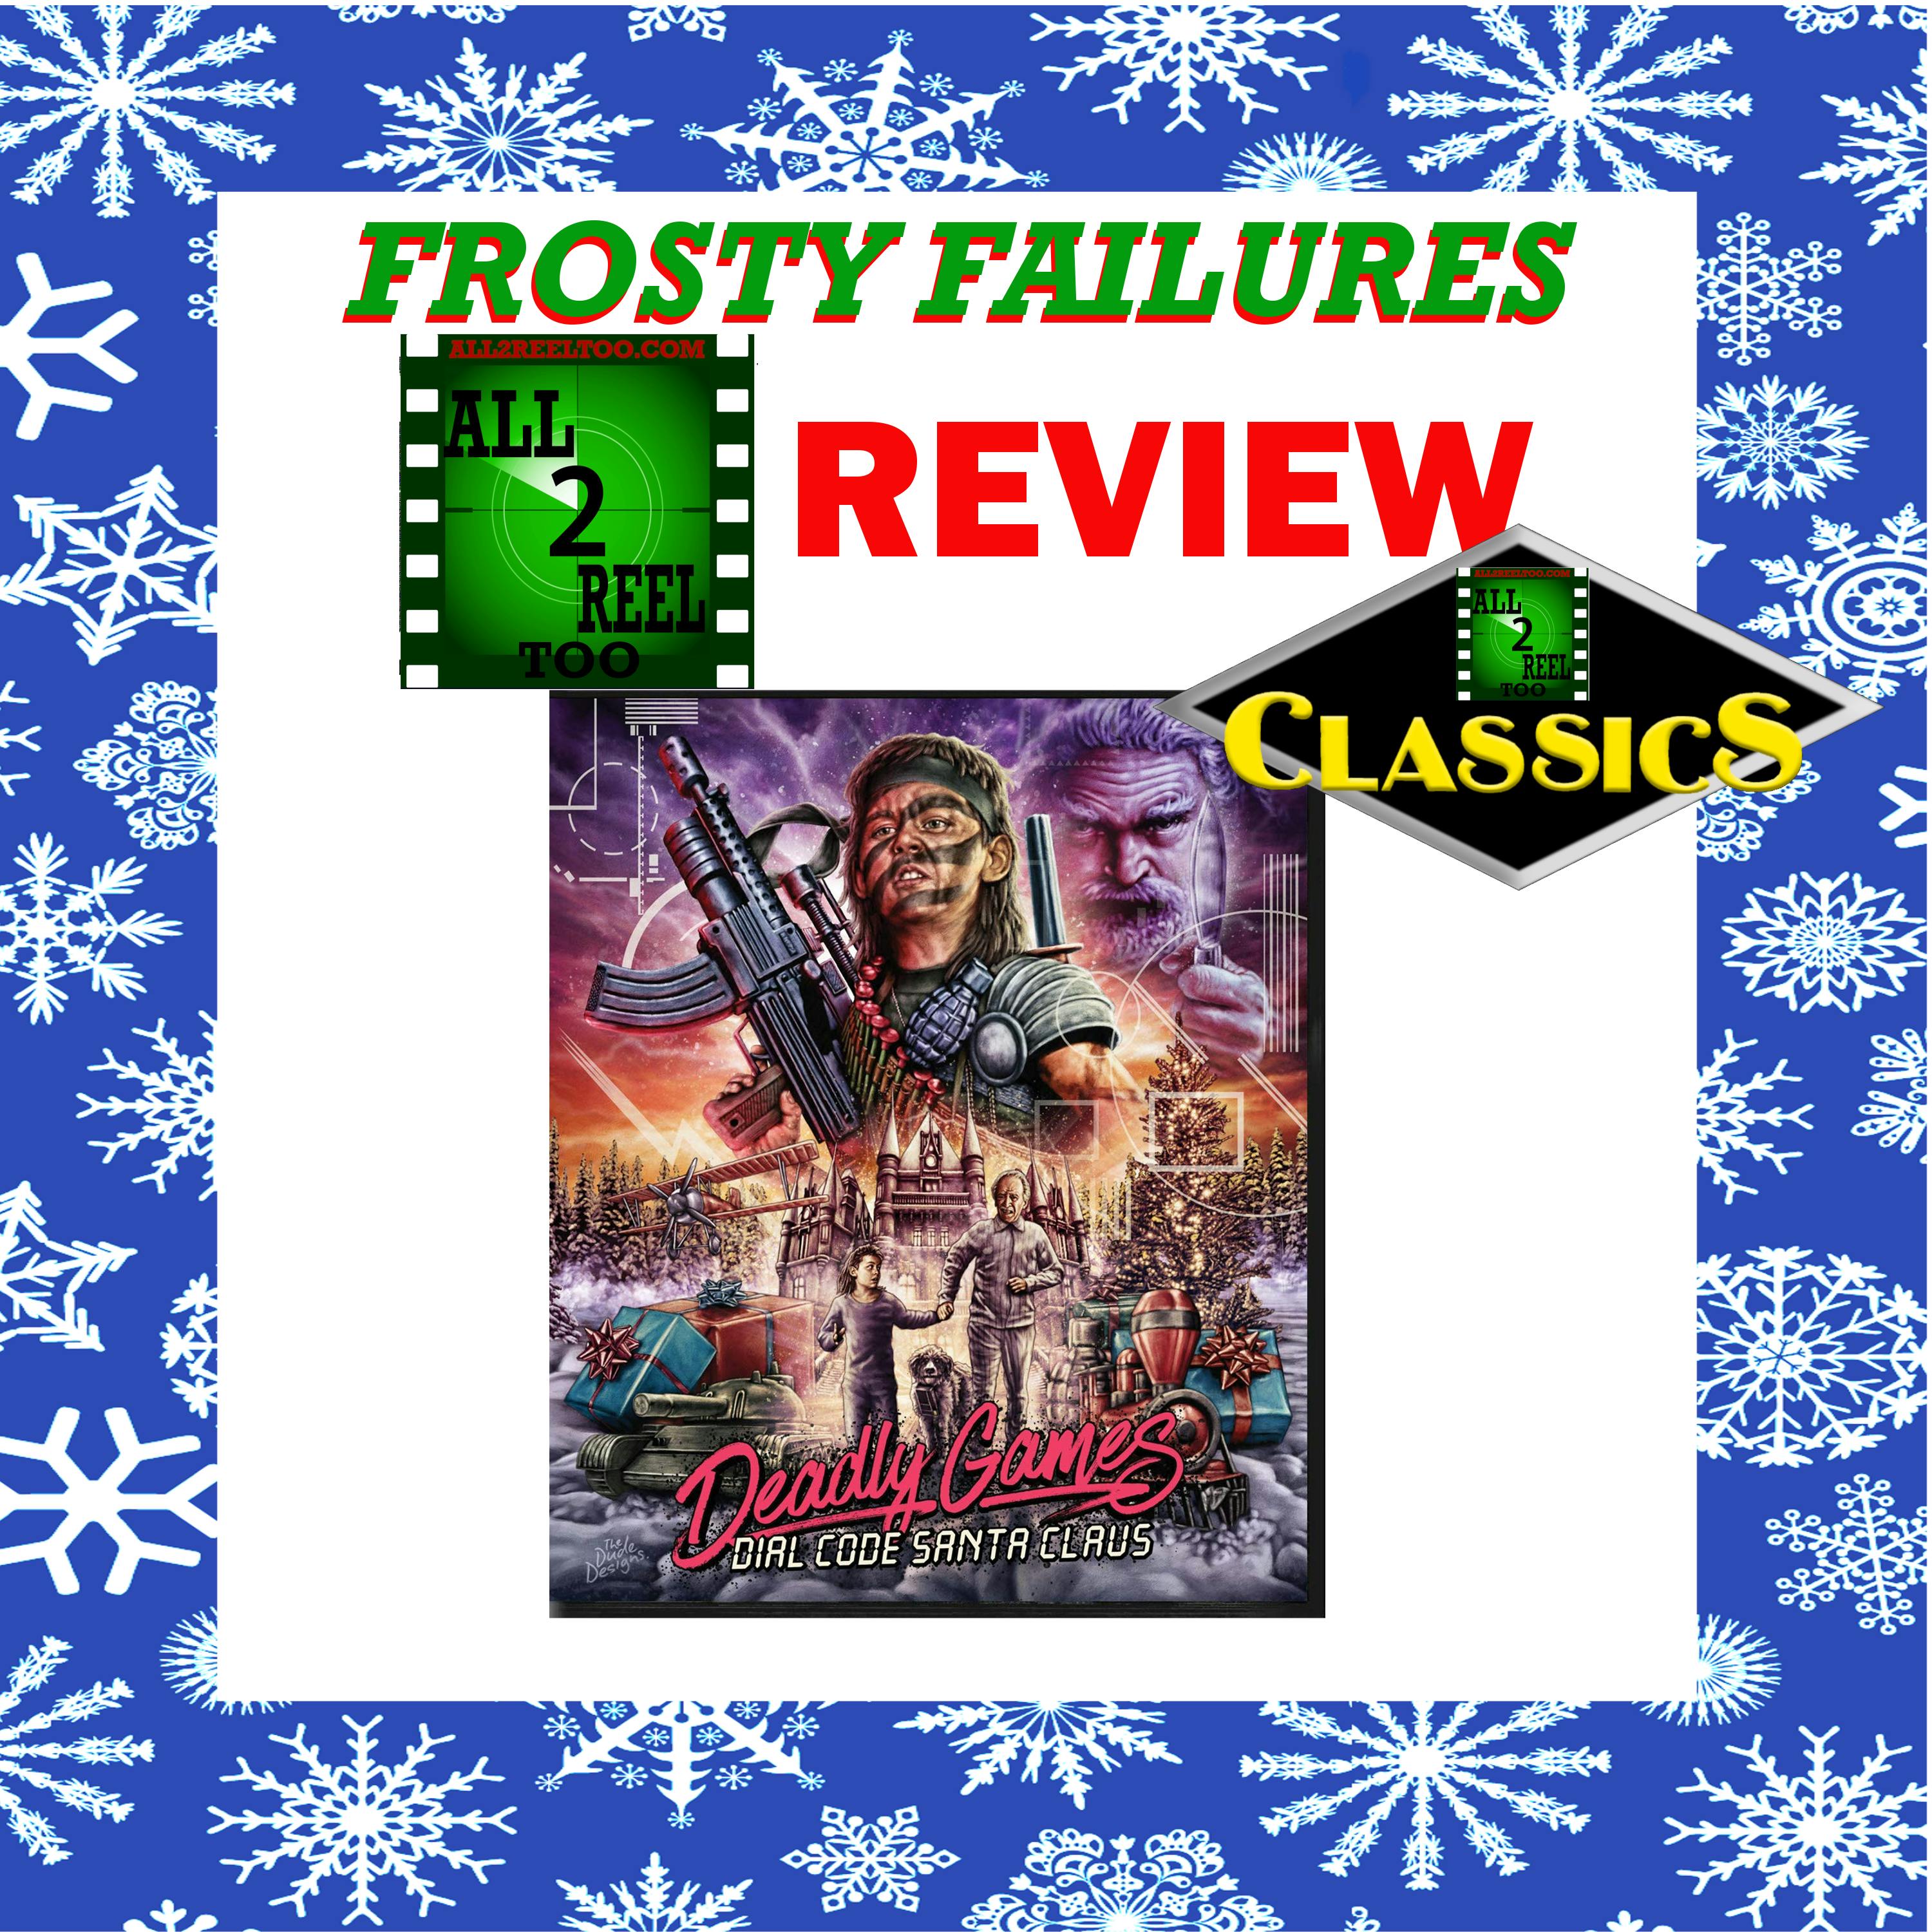 3615 Code Père Noël AKA Deadly Games (1989) - FROSTY FAILURES CLASSIC EPISODE